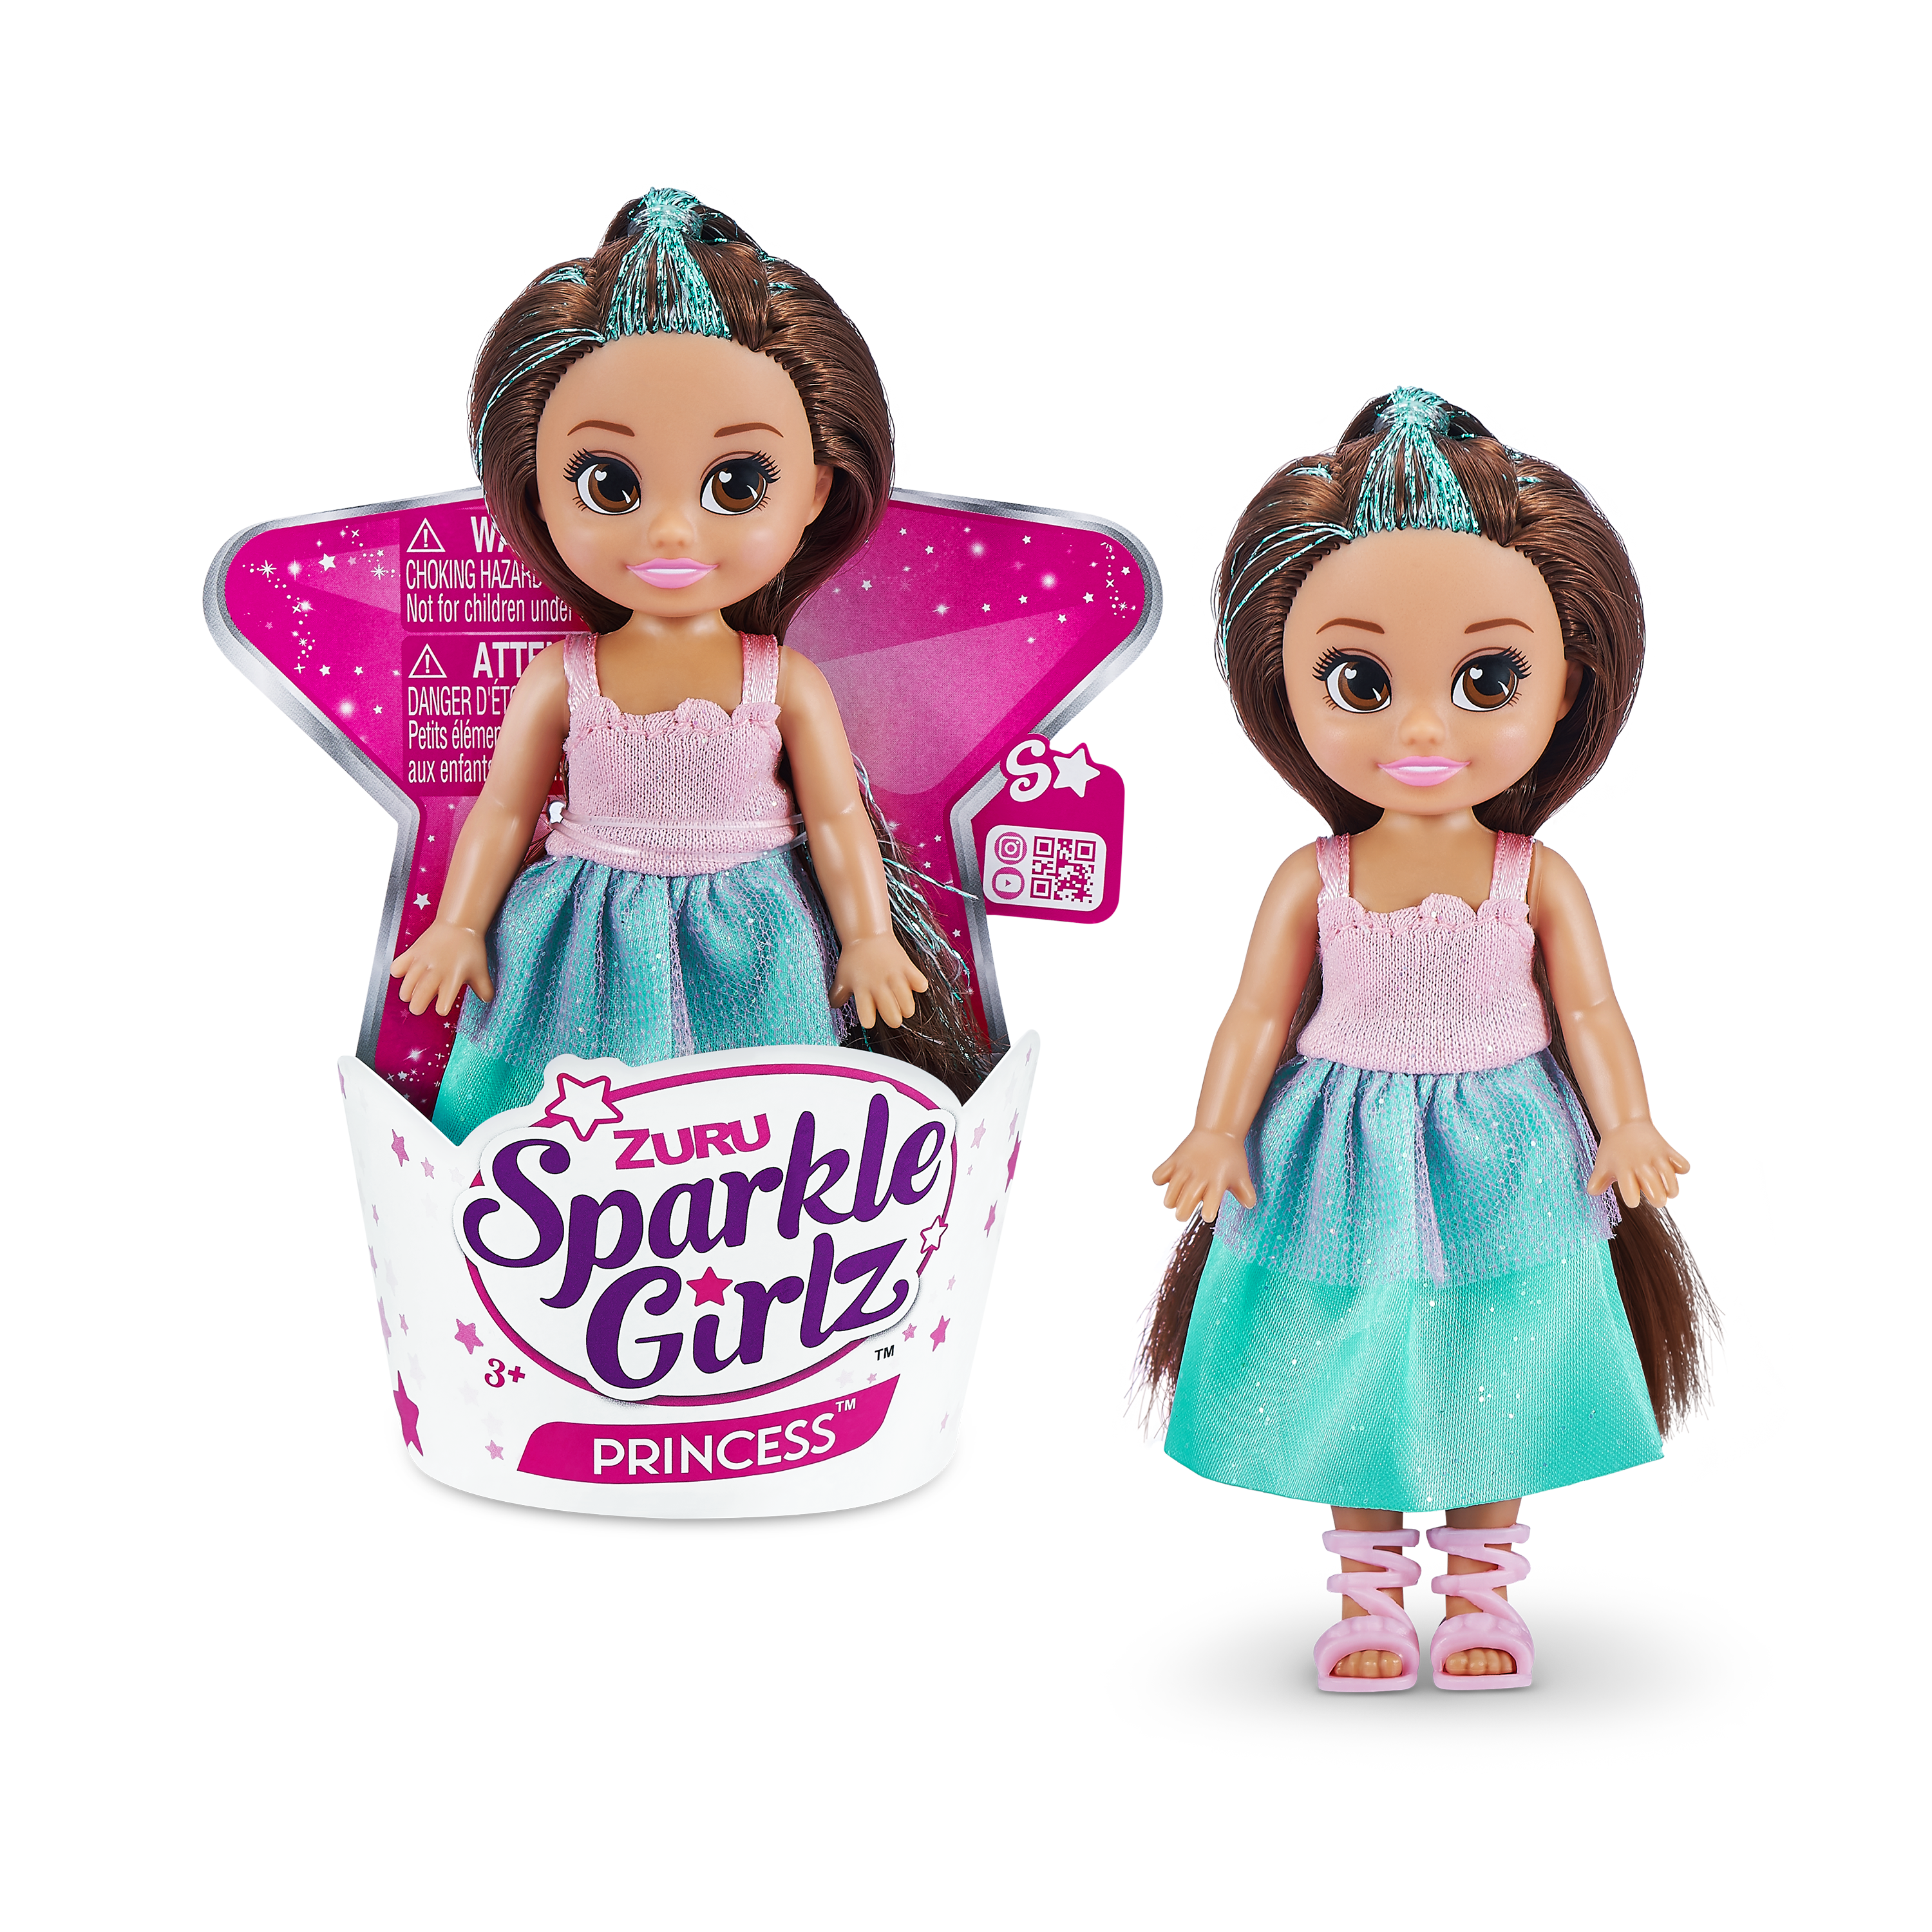 Kidscreen » Archive » Zuru picks up Sparkle Girlz doll line